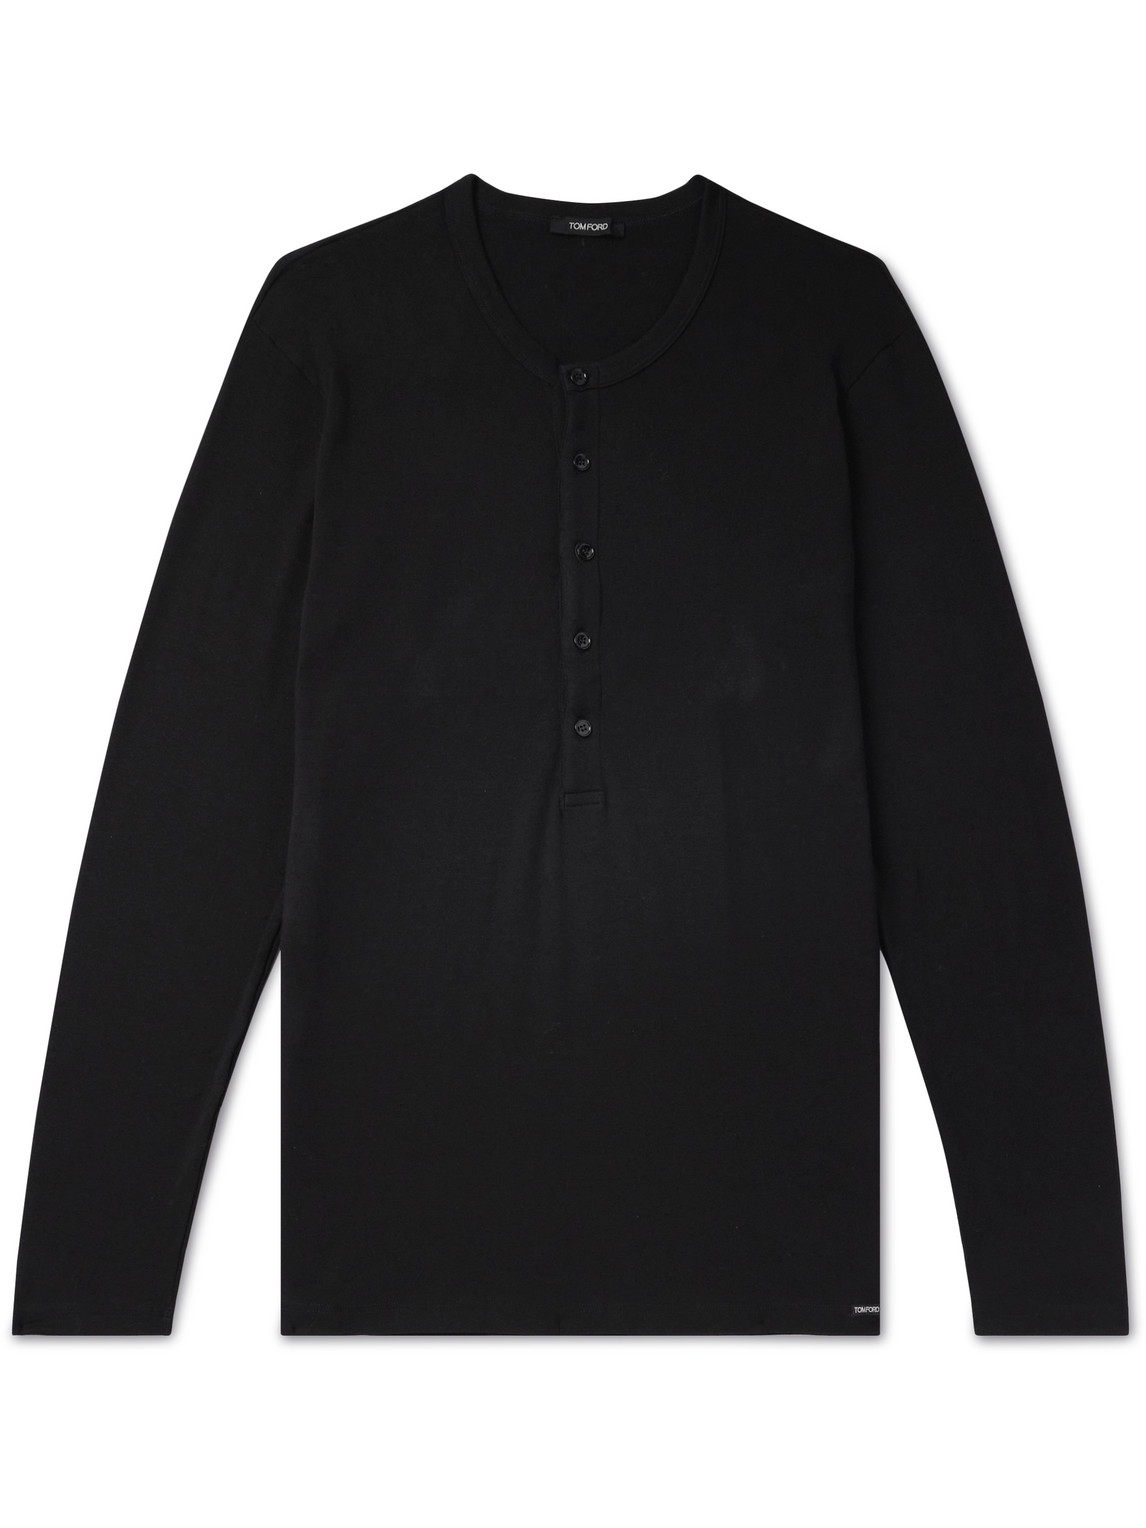 TOM FORD - Stretch-Cotton Jersey Henley Pyjama T-Shirt - Men - Black - L von TOM FORD